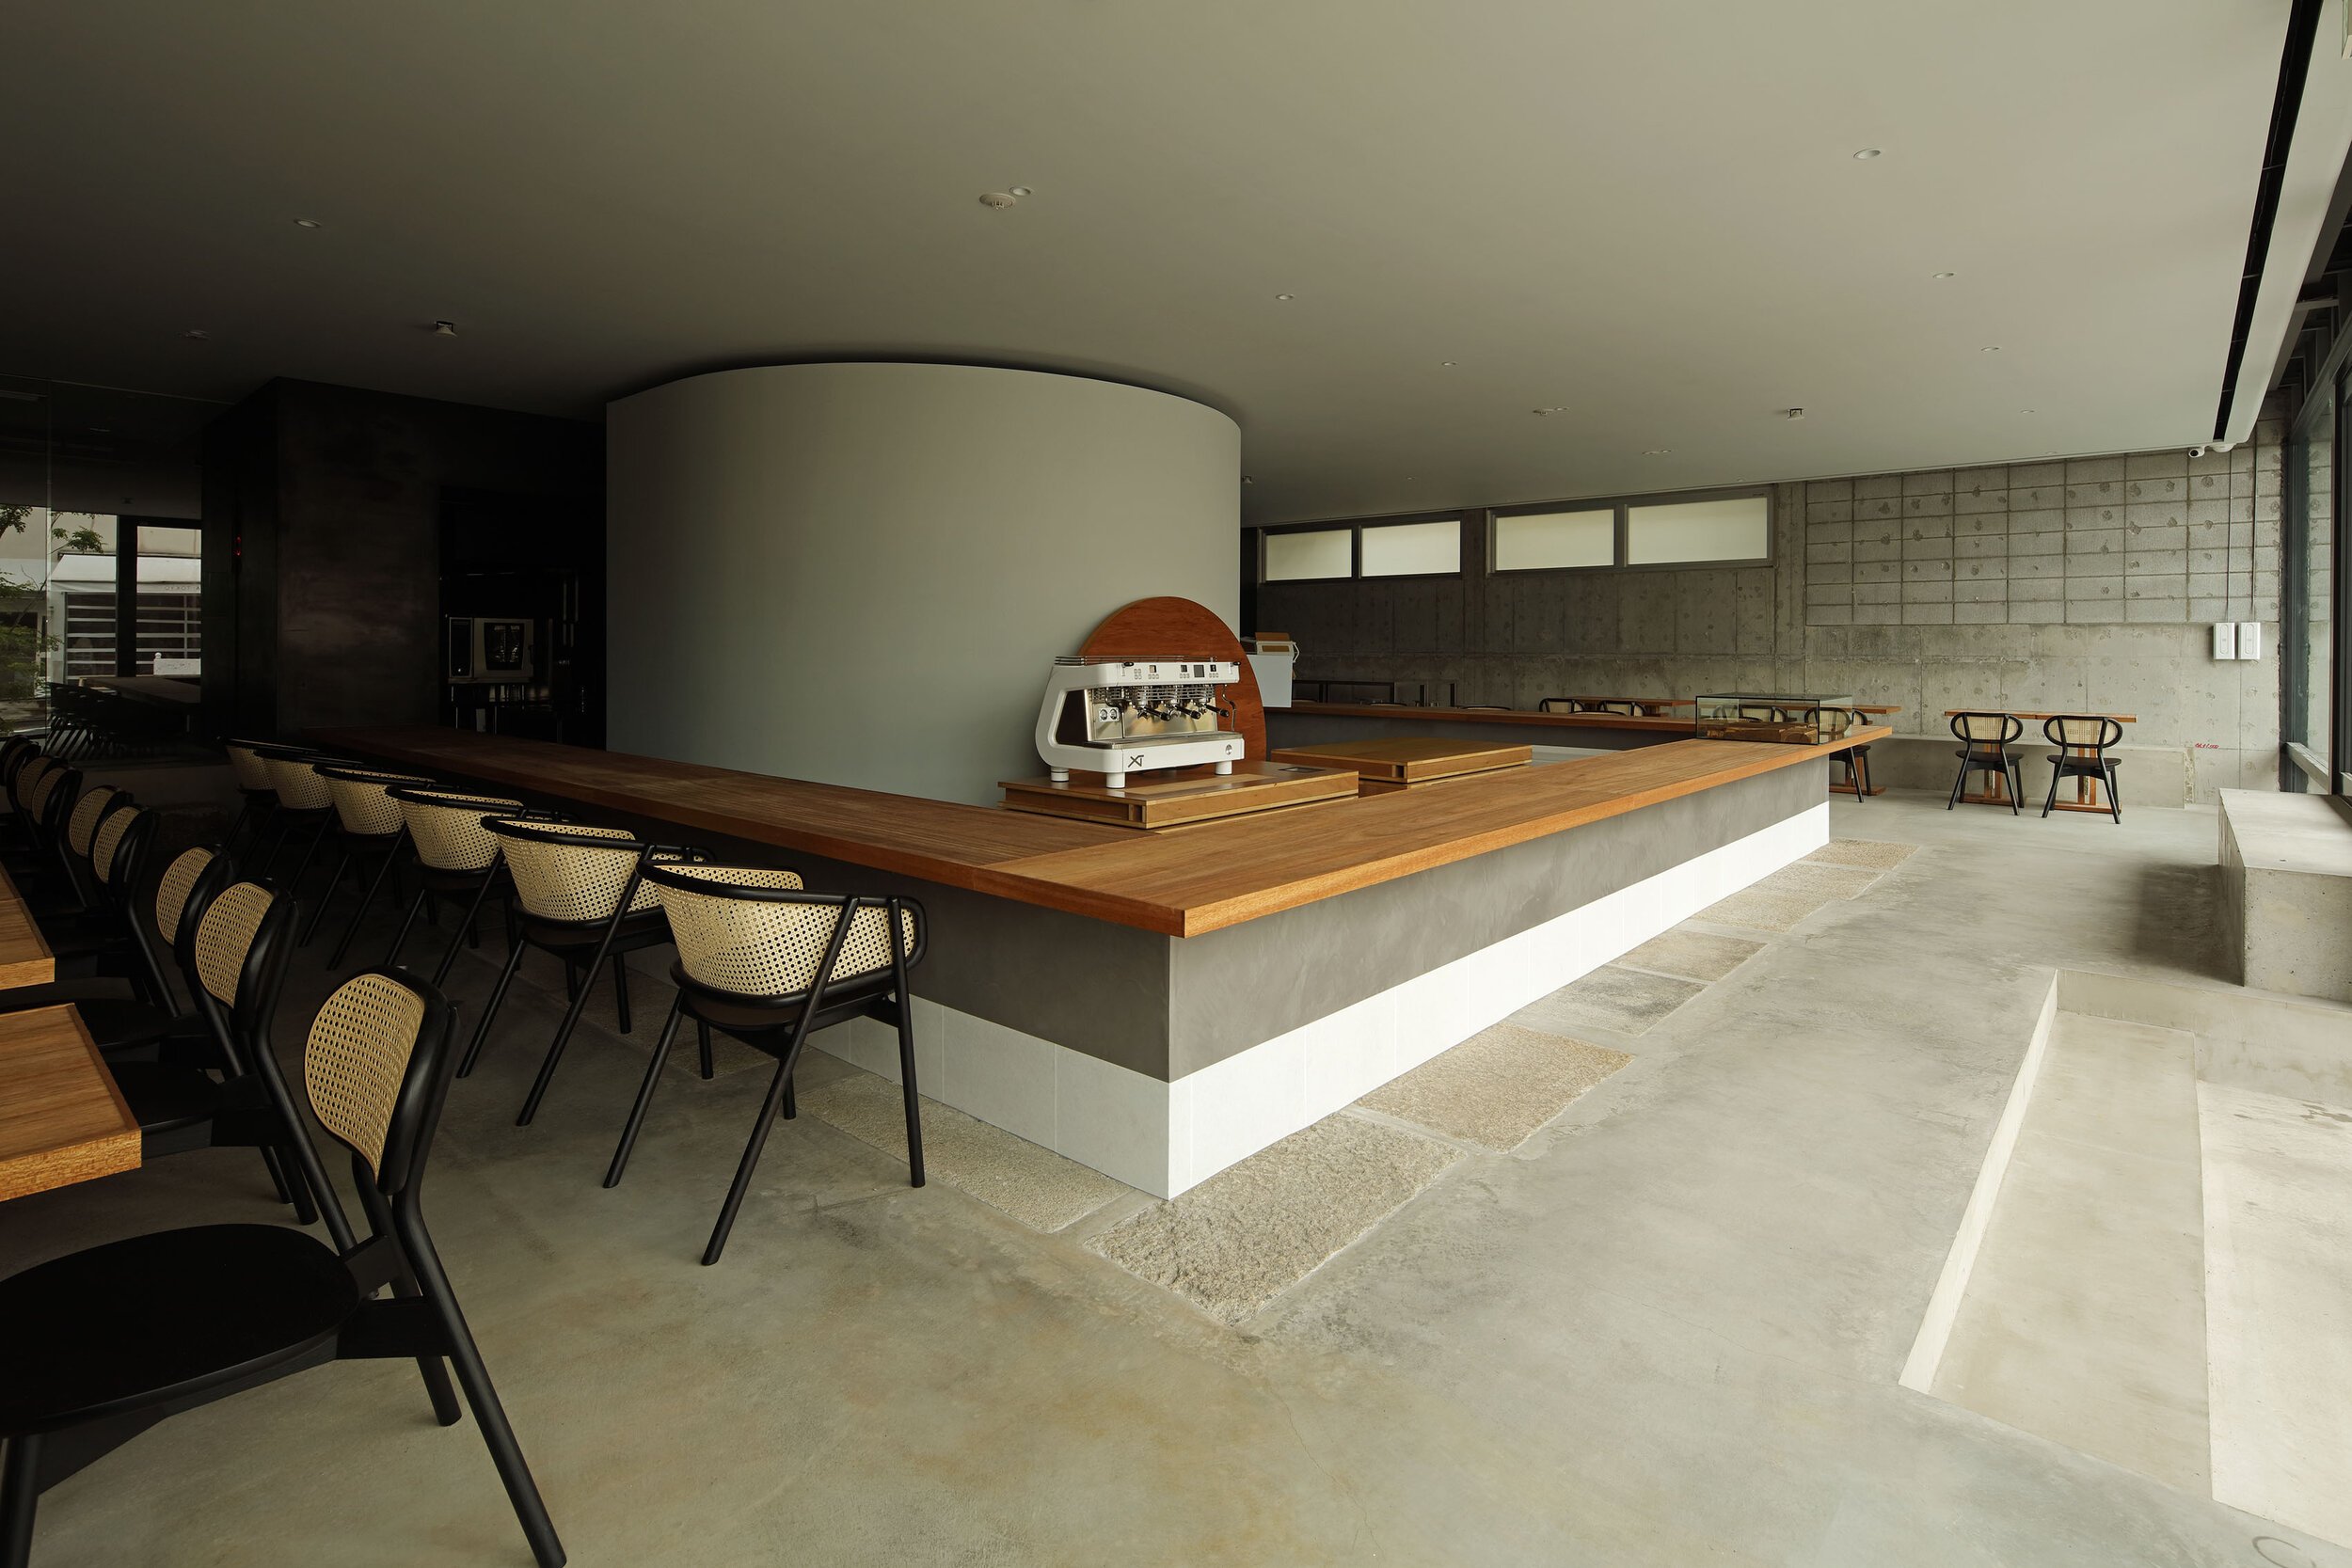  Yusuke Seki Studioの関祐介がデザインしたカフェOgawa Coffee Laboratoryの客席とカウンター 